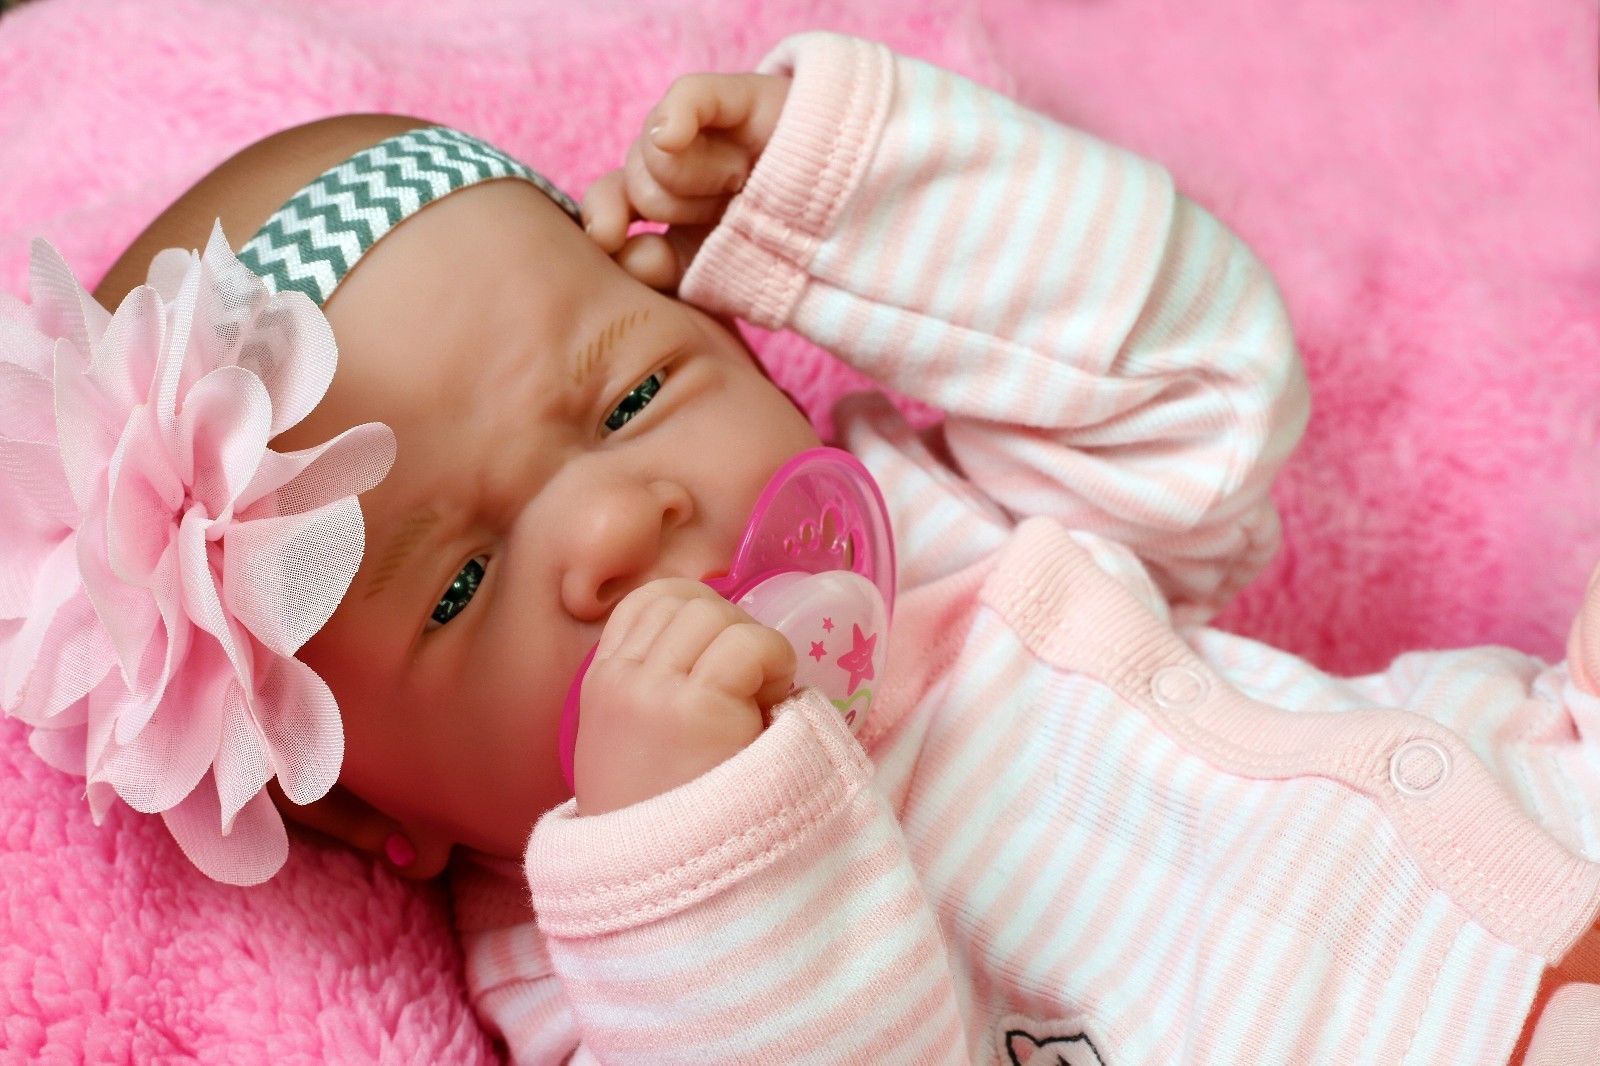 Baby Girl Smiling Soft Doll Realistic Reborn Berenguer 15" Vinyl Lifelike Alive 